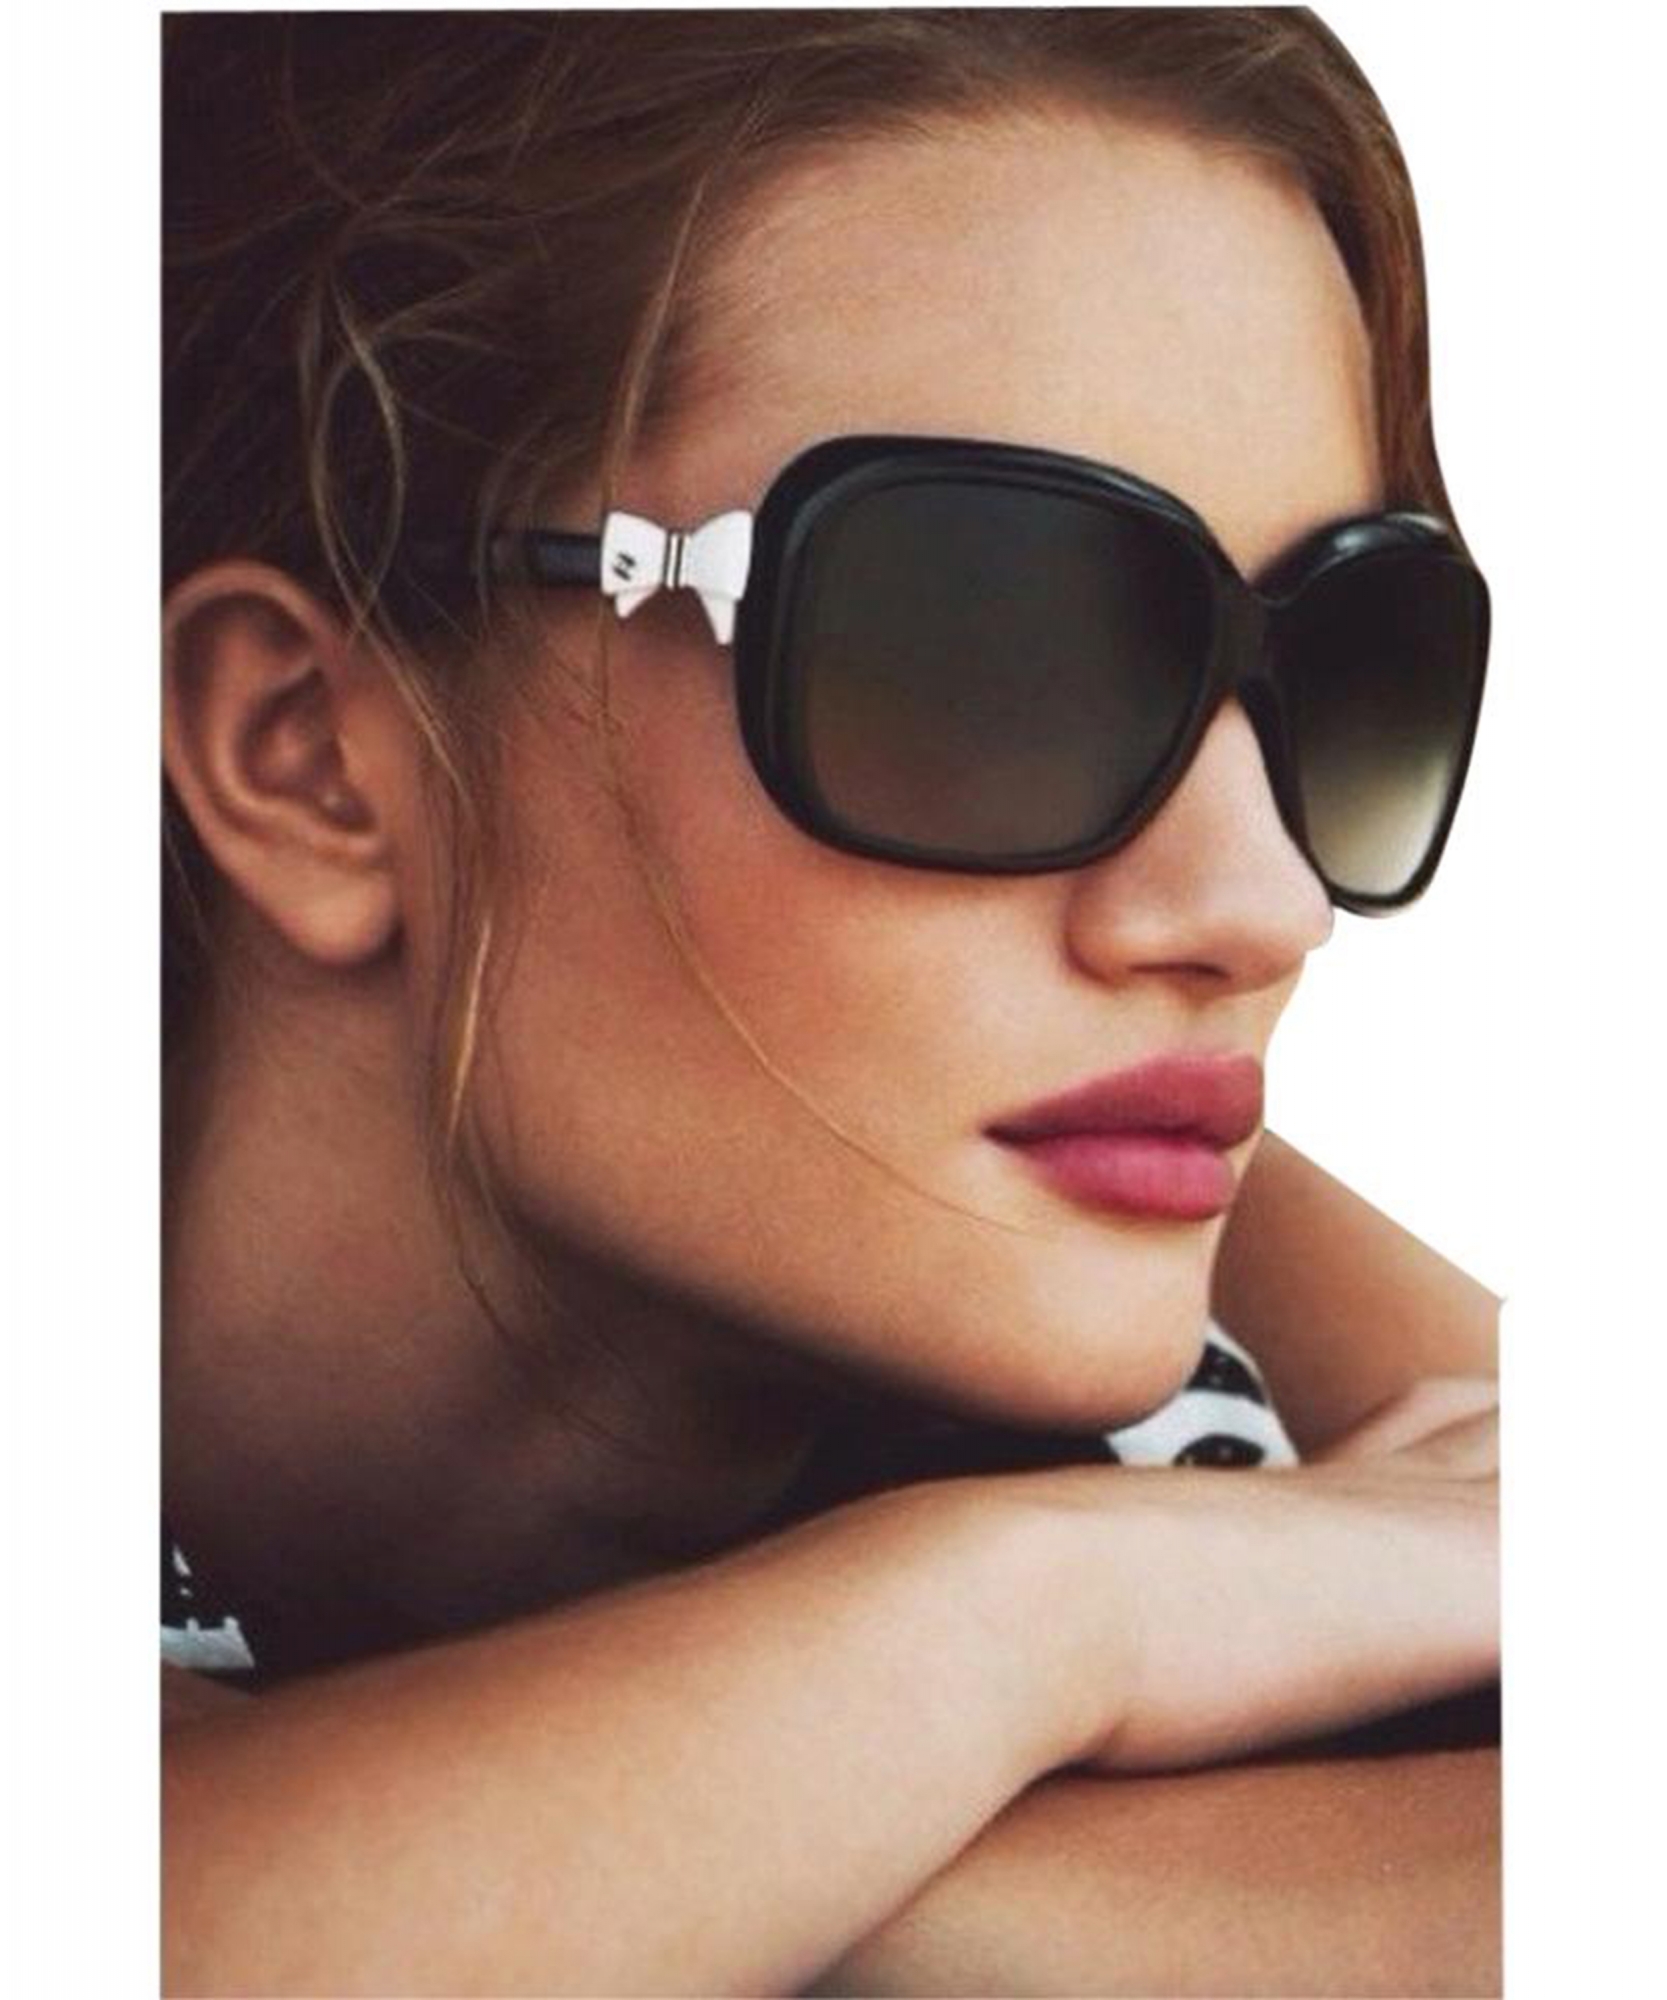 Chanel CC Bow Sunglasses 5171 - Chanel